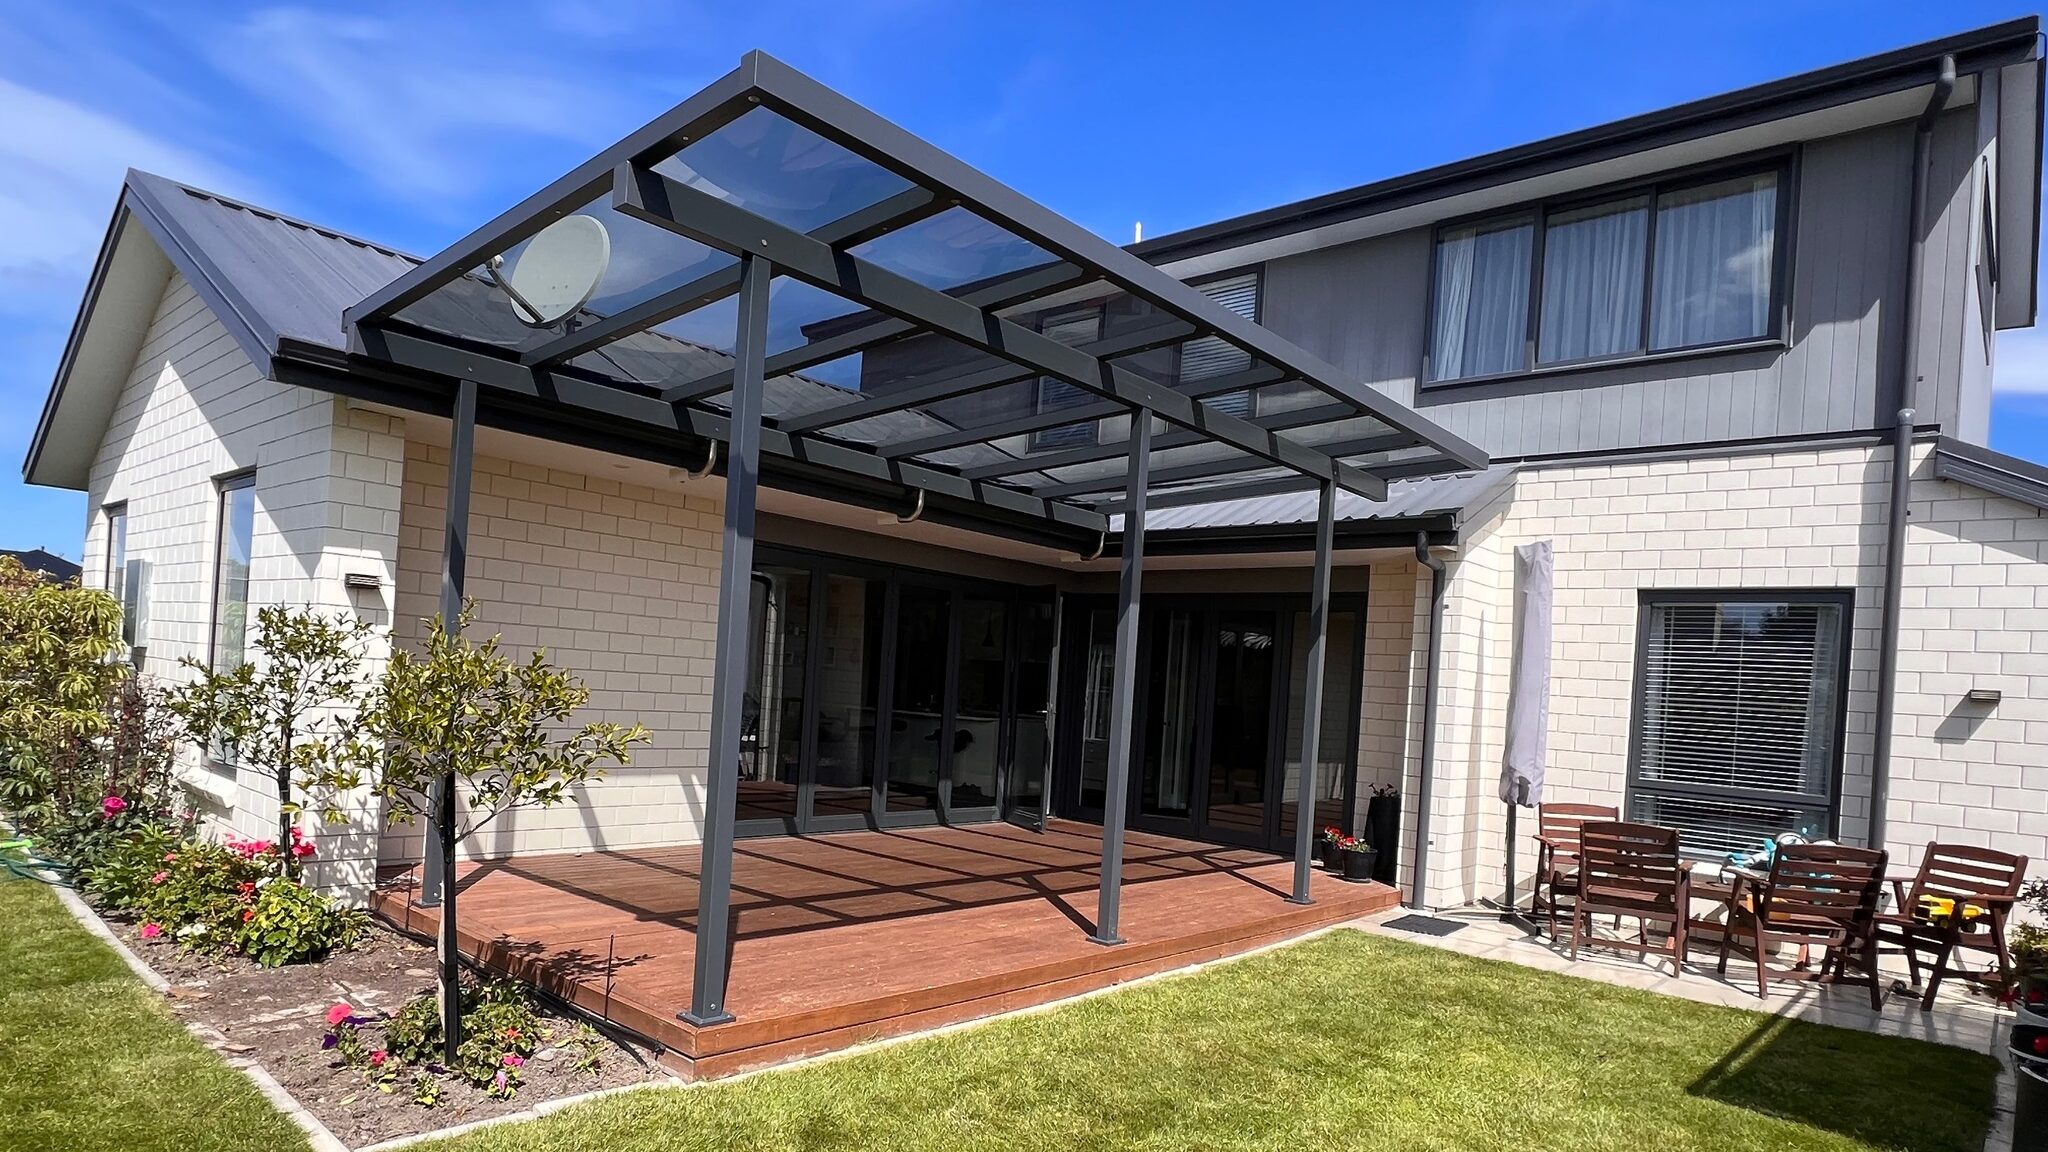 Atap SolarFlat: Mengurangi Risiko Pemudaran Interior Rumah